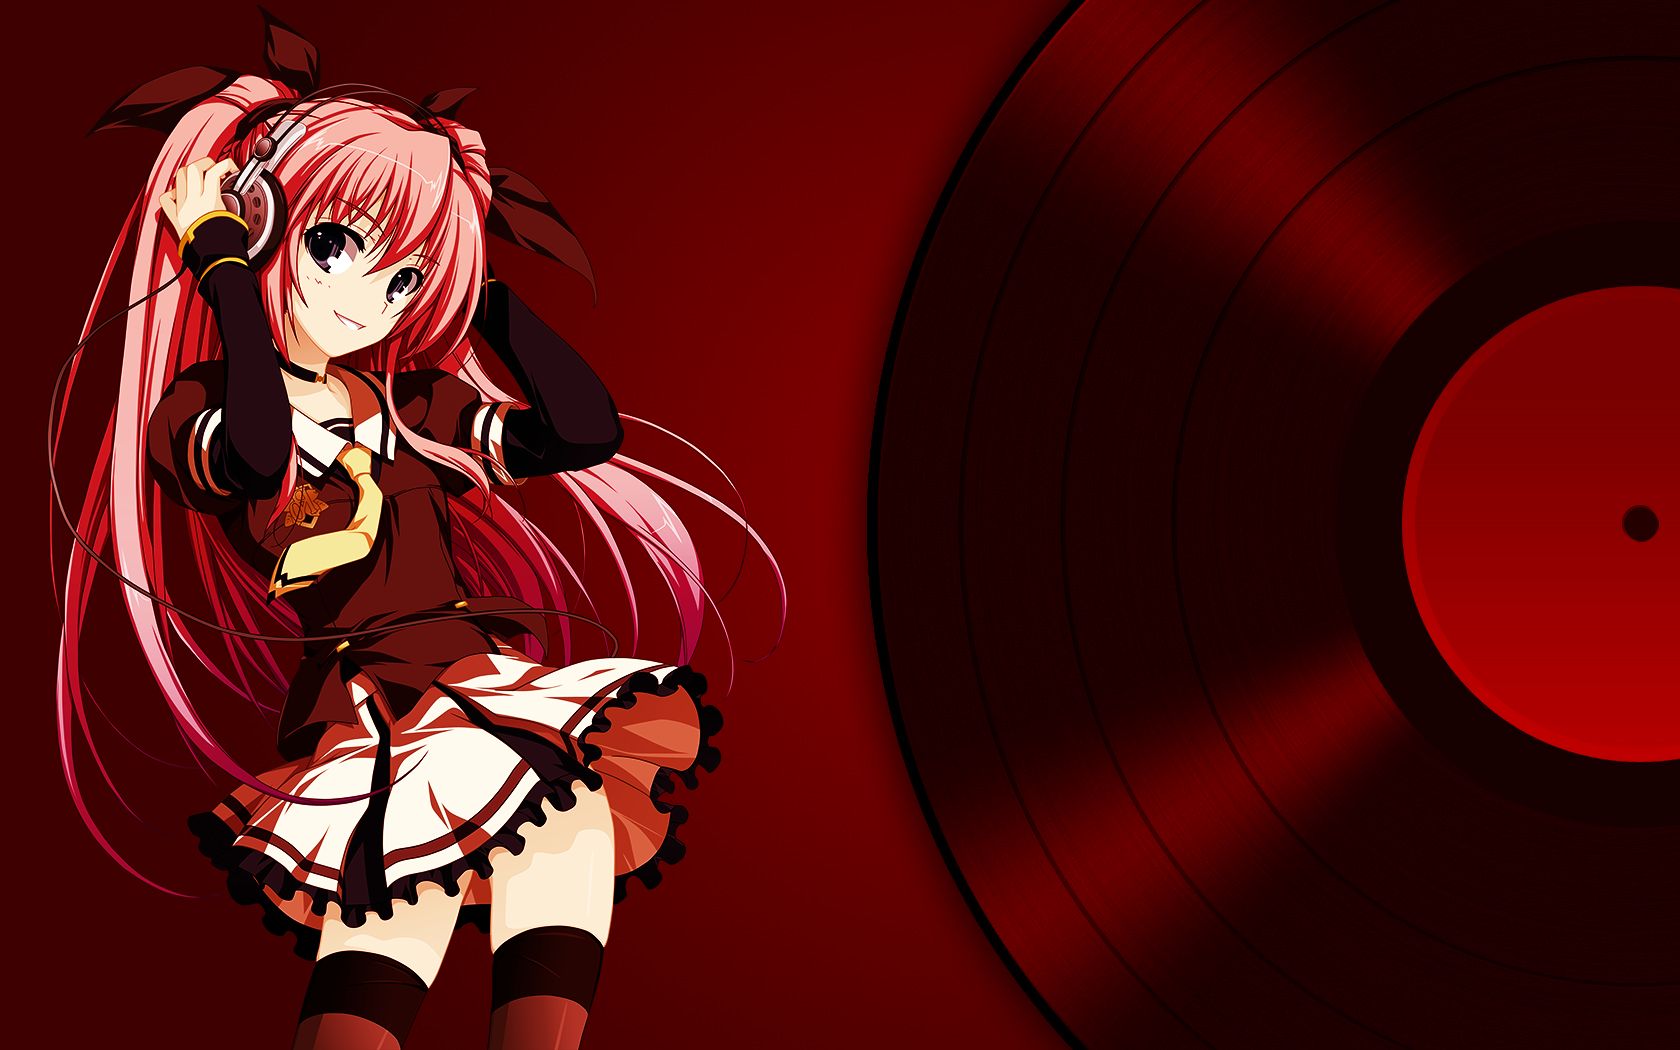 Download Anime Music  Premium App Free on PC Emulator  LDPlayer